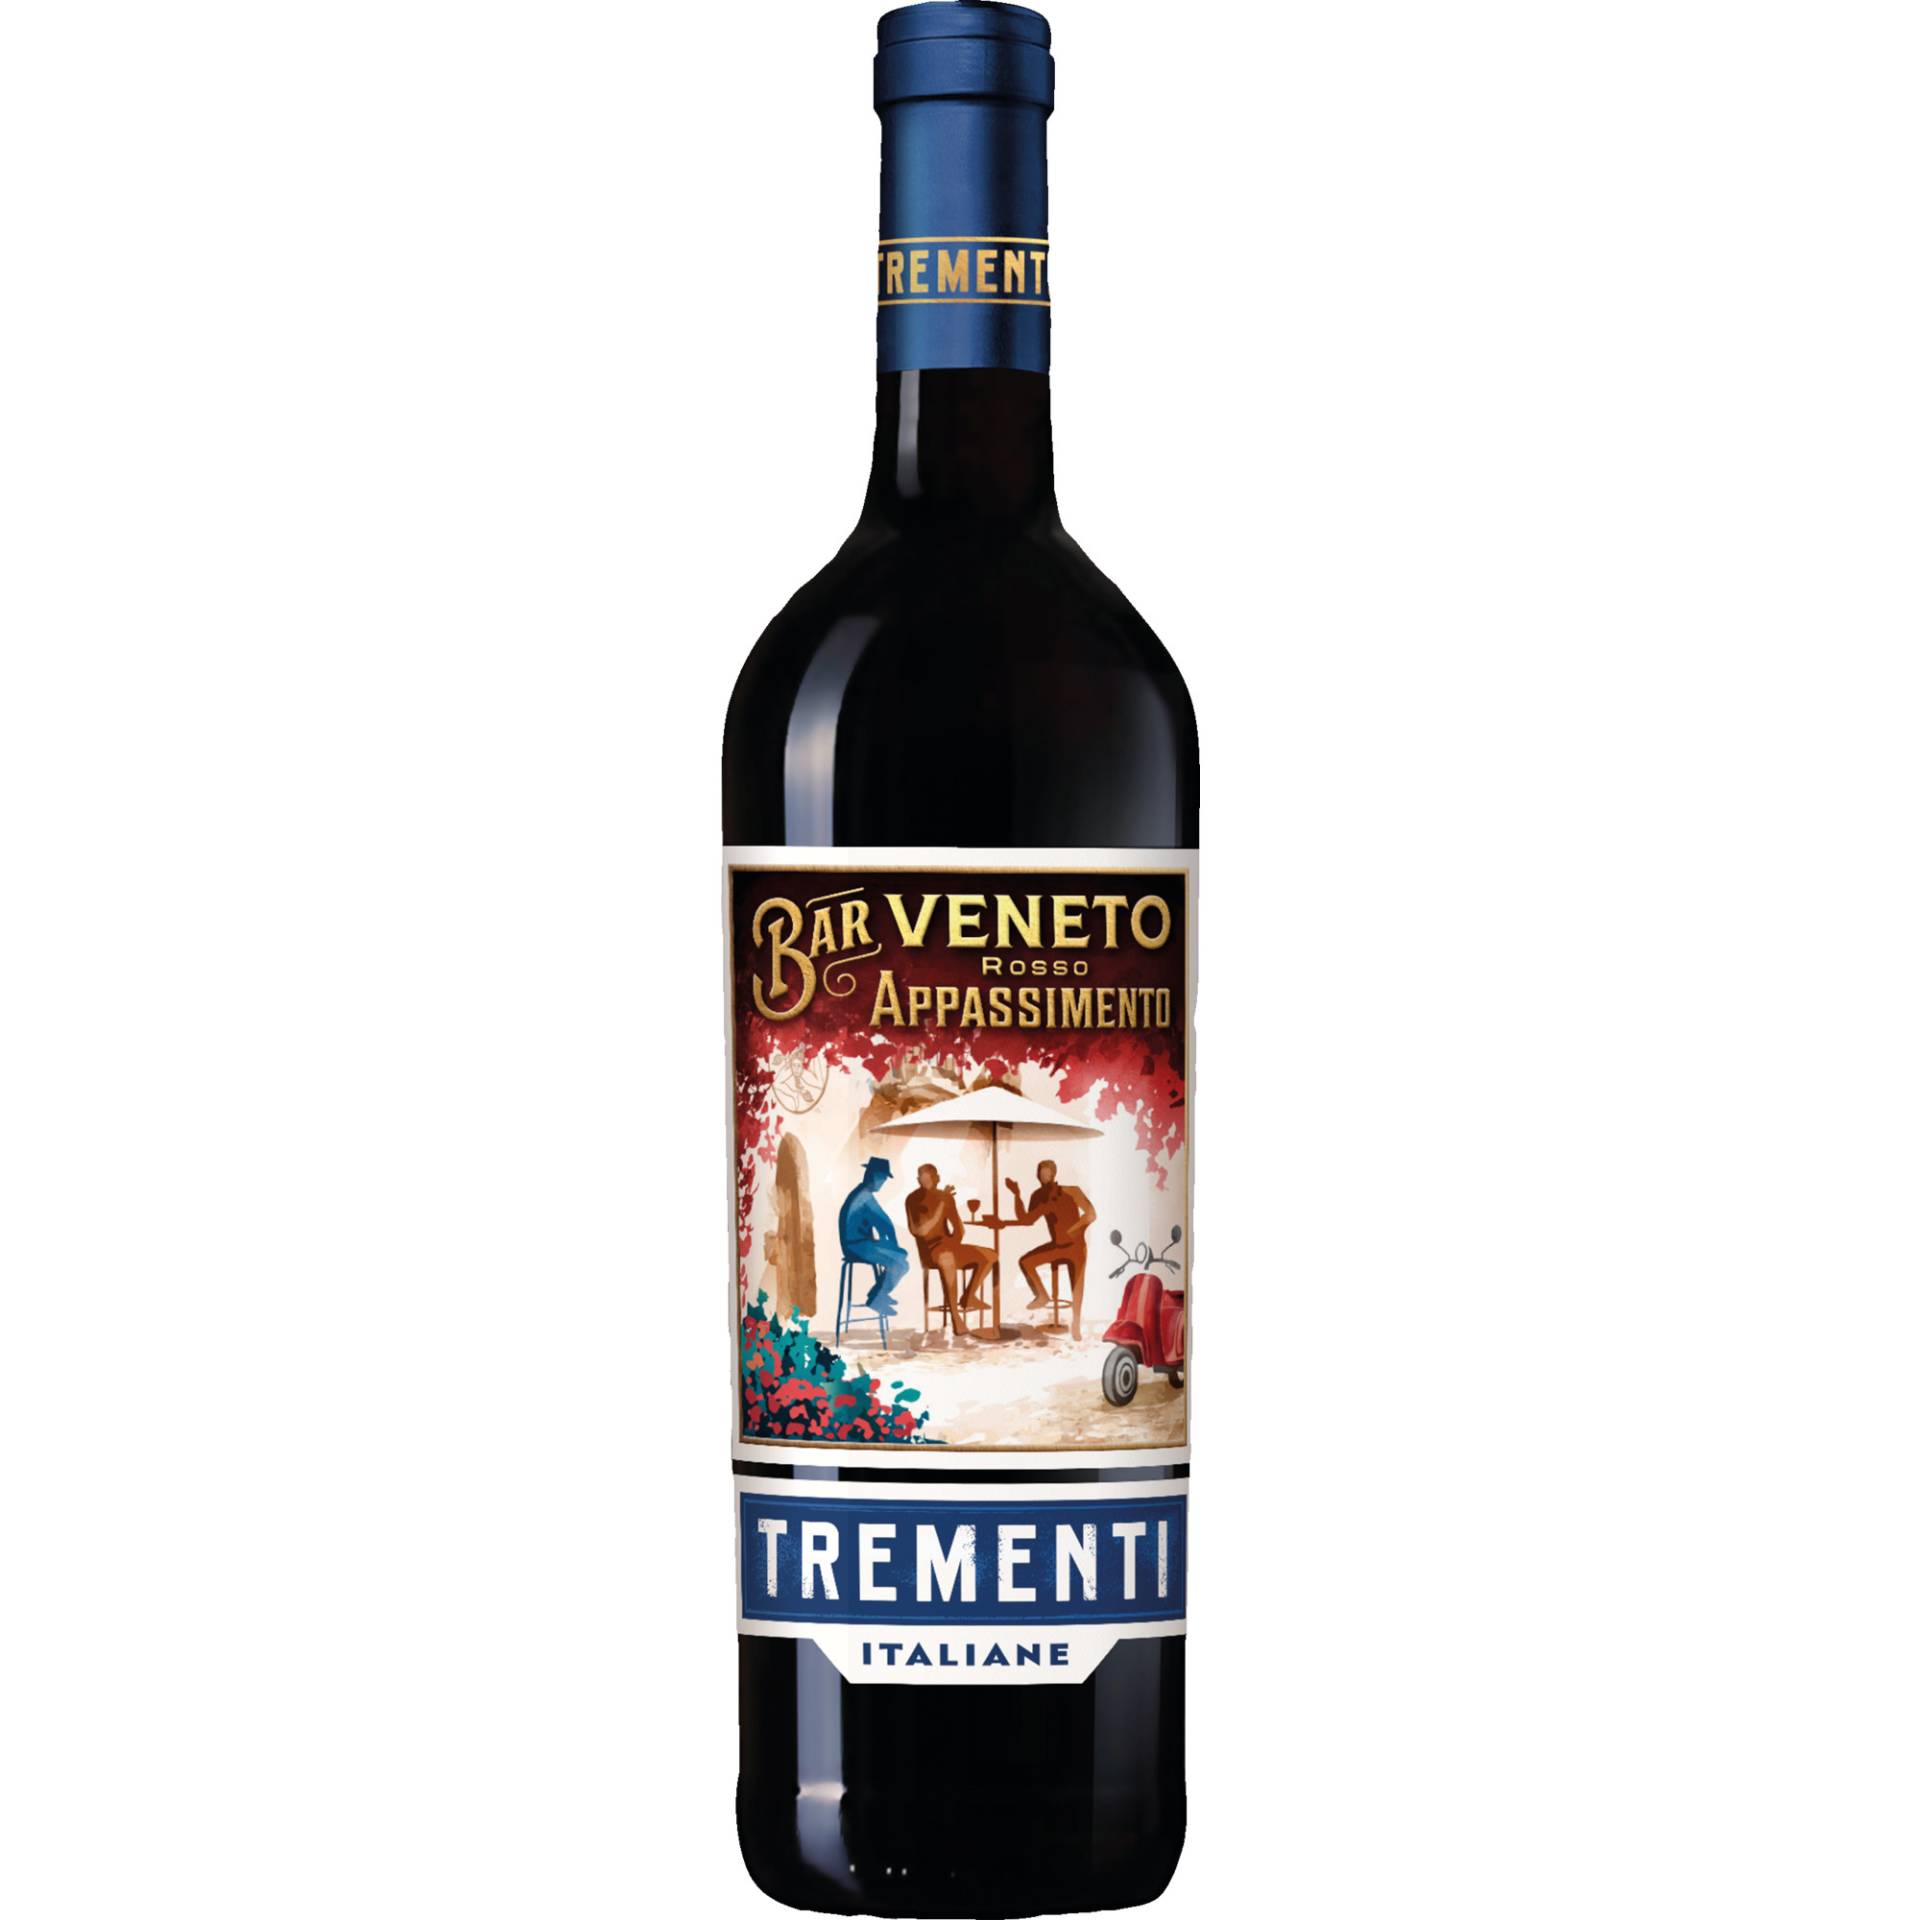 Trementi Appassimento, Veneto IGP, Venetien, 2020, Rotwein von Orion Wines S.C.A.R.L., 38015 Lavis (TN), Italia; bottled by T.C. S.C.A. FO 11944 IT